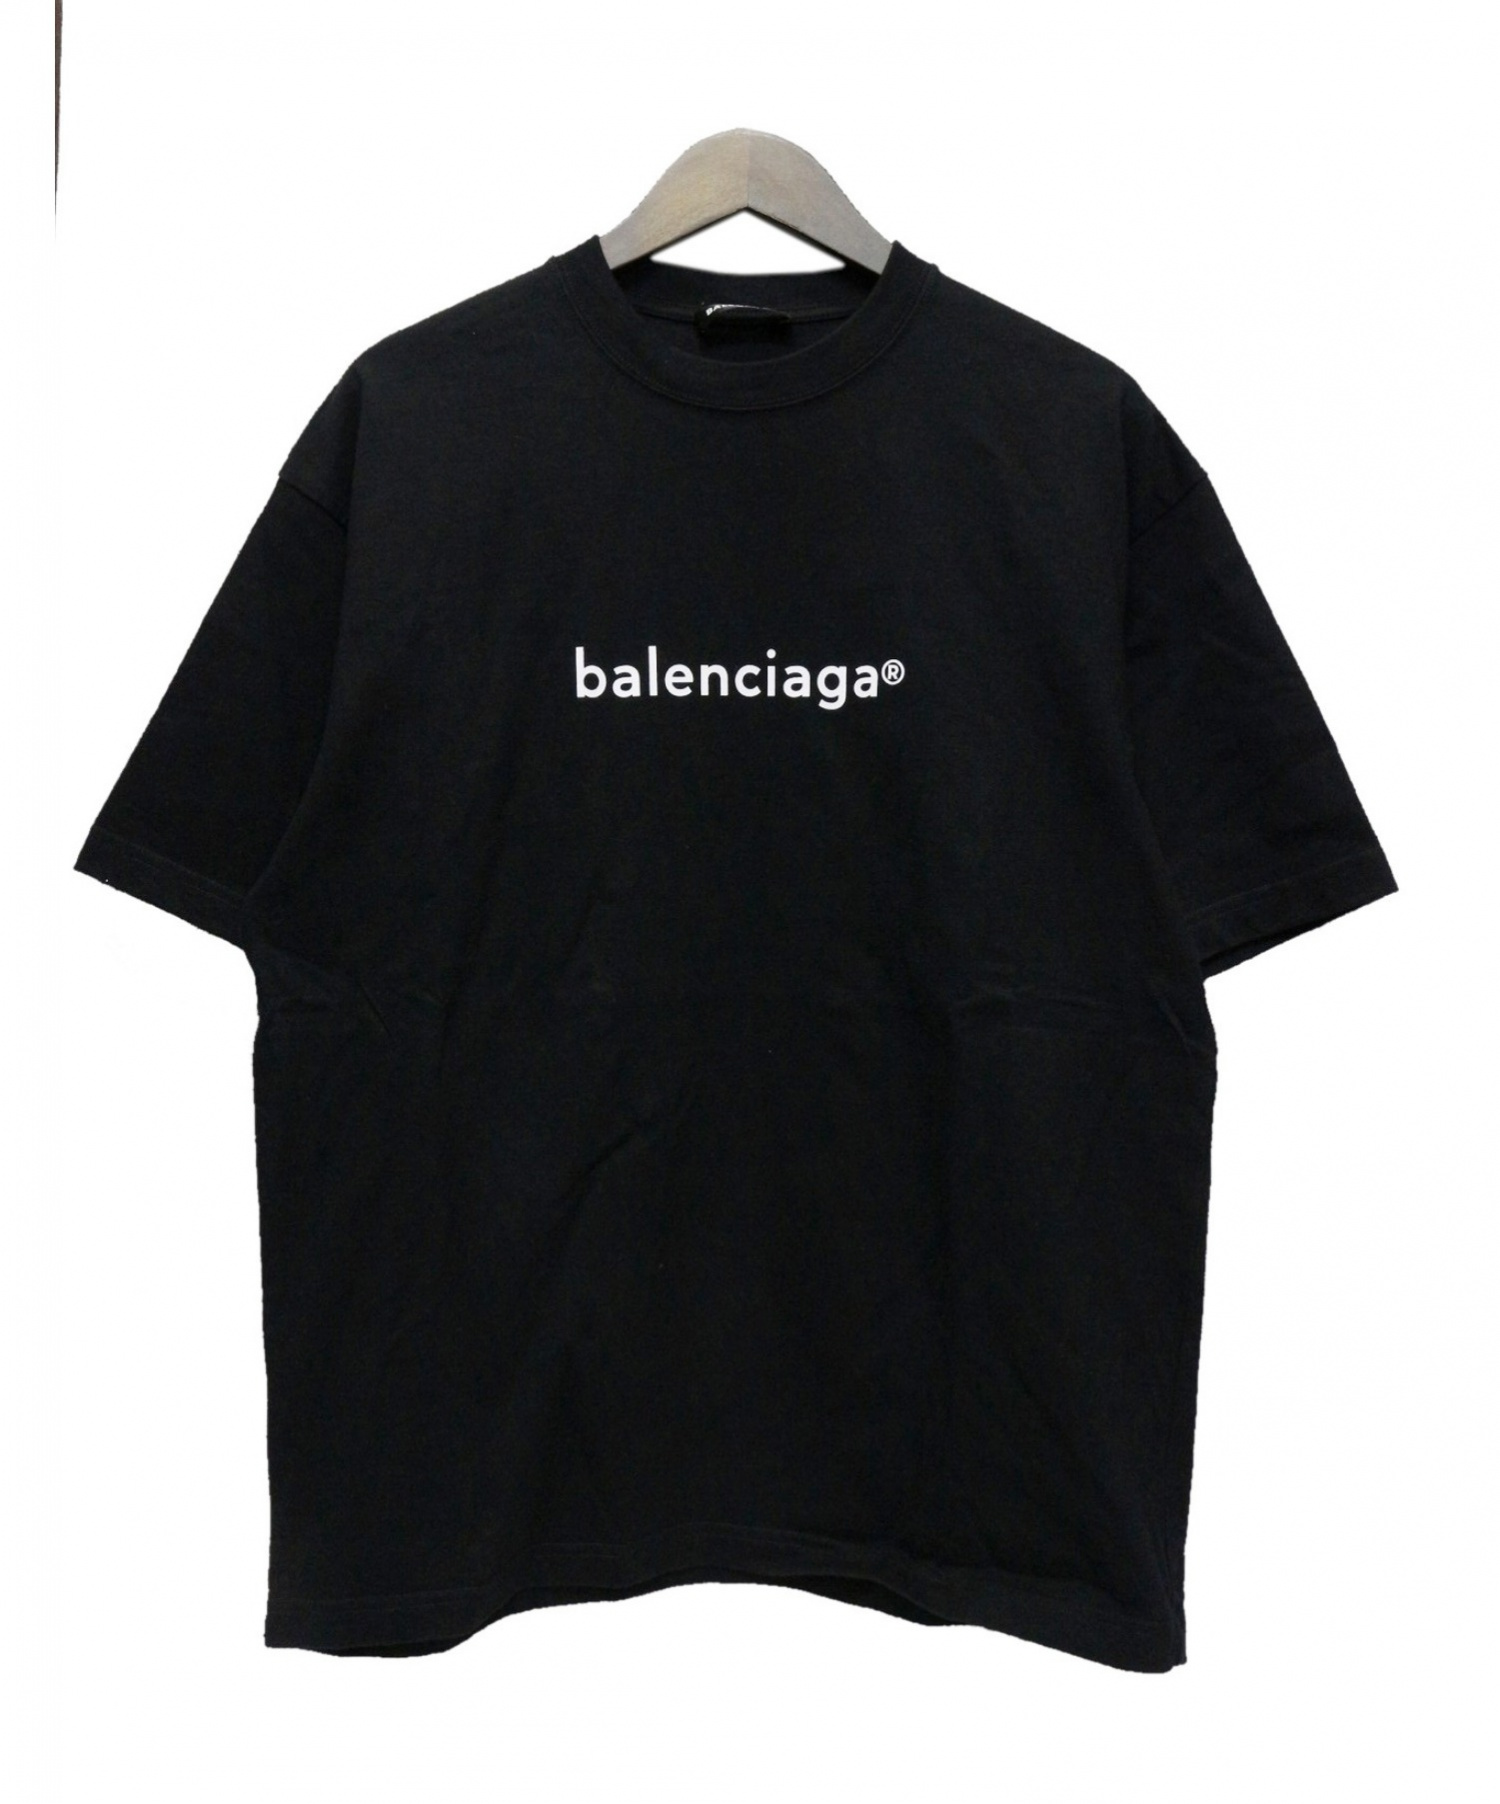 BALENCIAGA (バレンシアガ) ロゴプリントTシャツ ブラック サイズ:XS